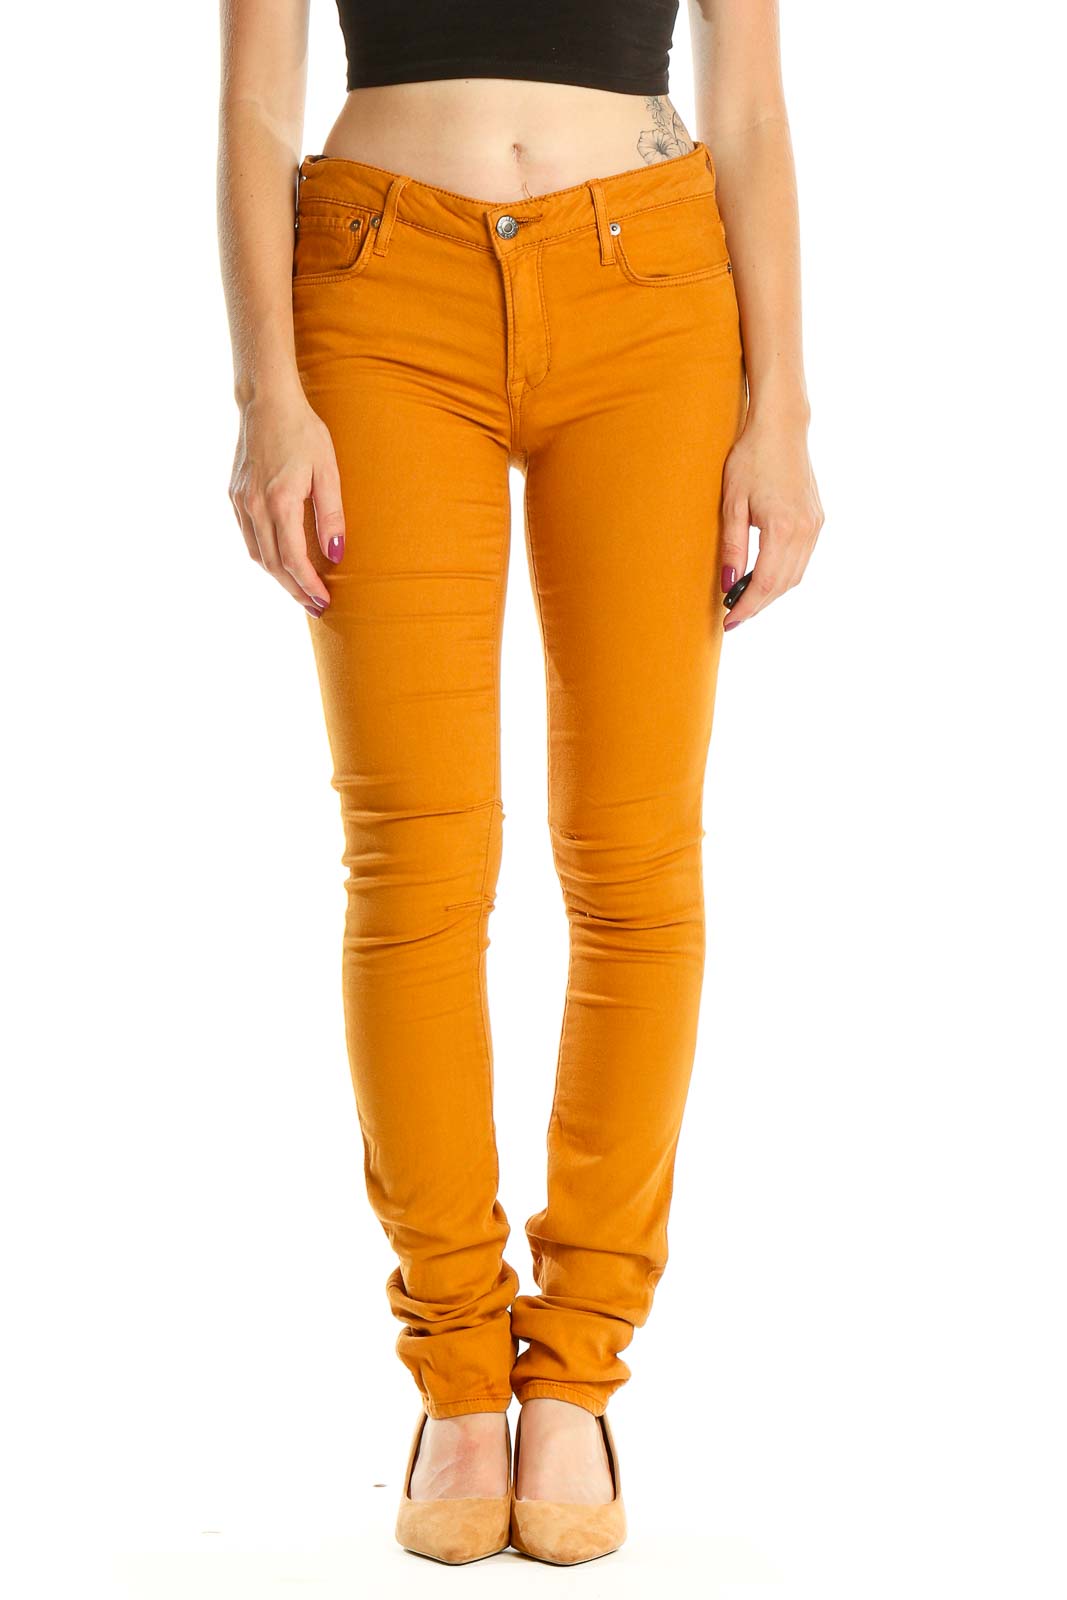 Orange All Day Wear Pants Front